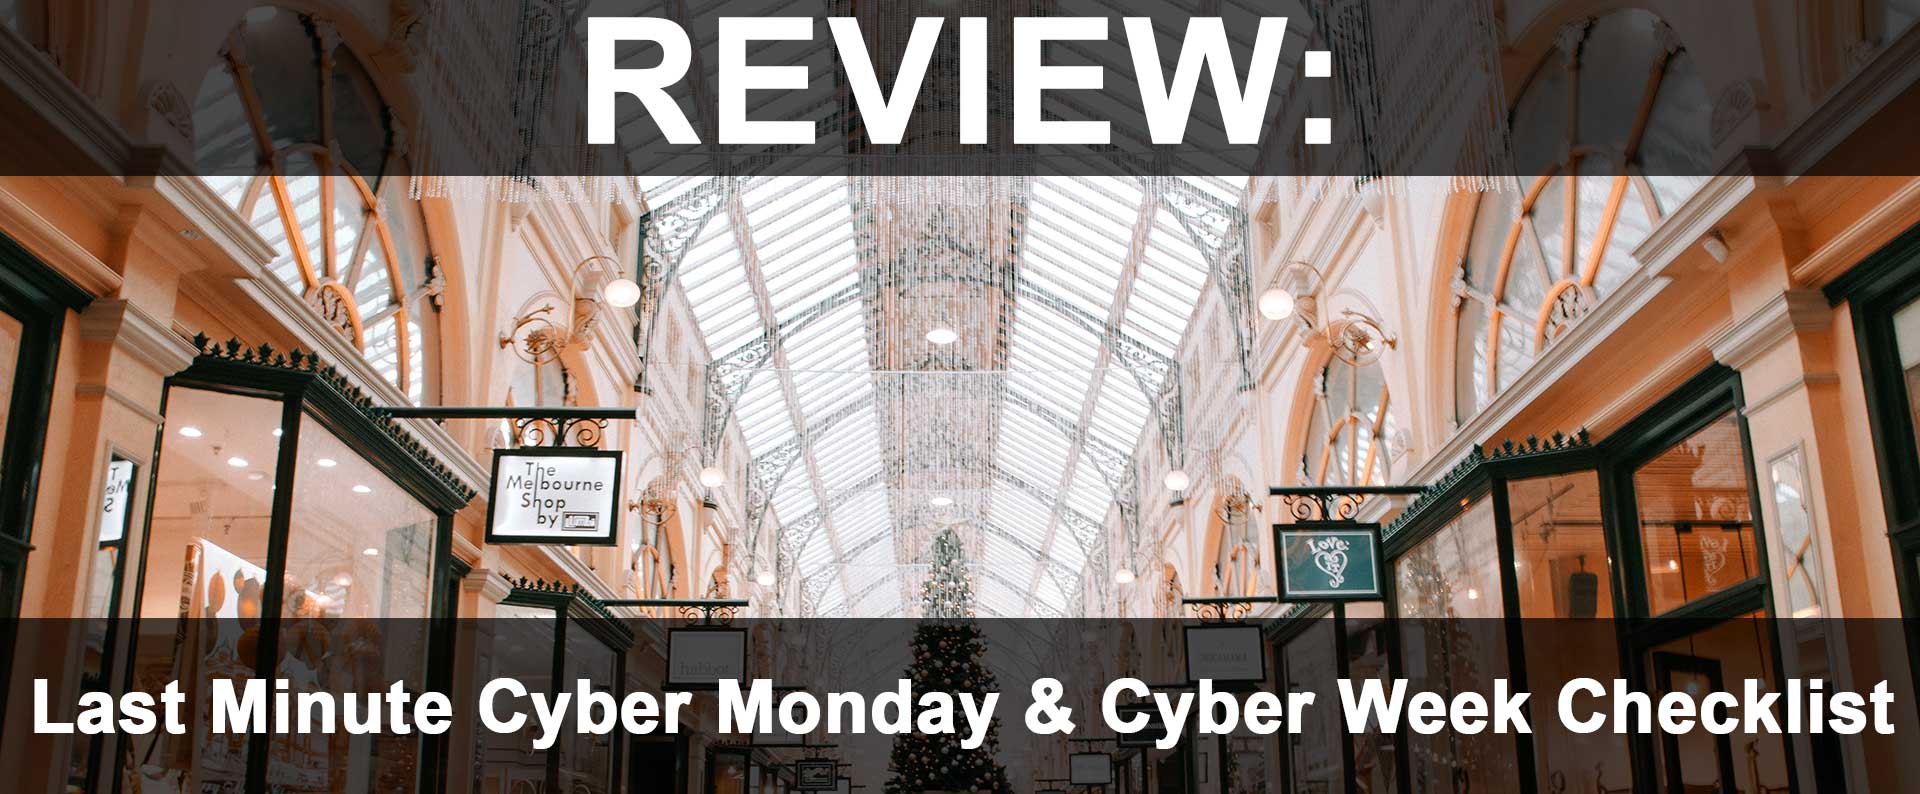 Last Minute Cyber Monday & Cyber Week Checklist